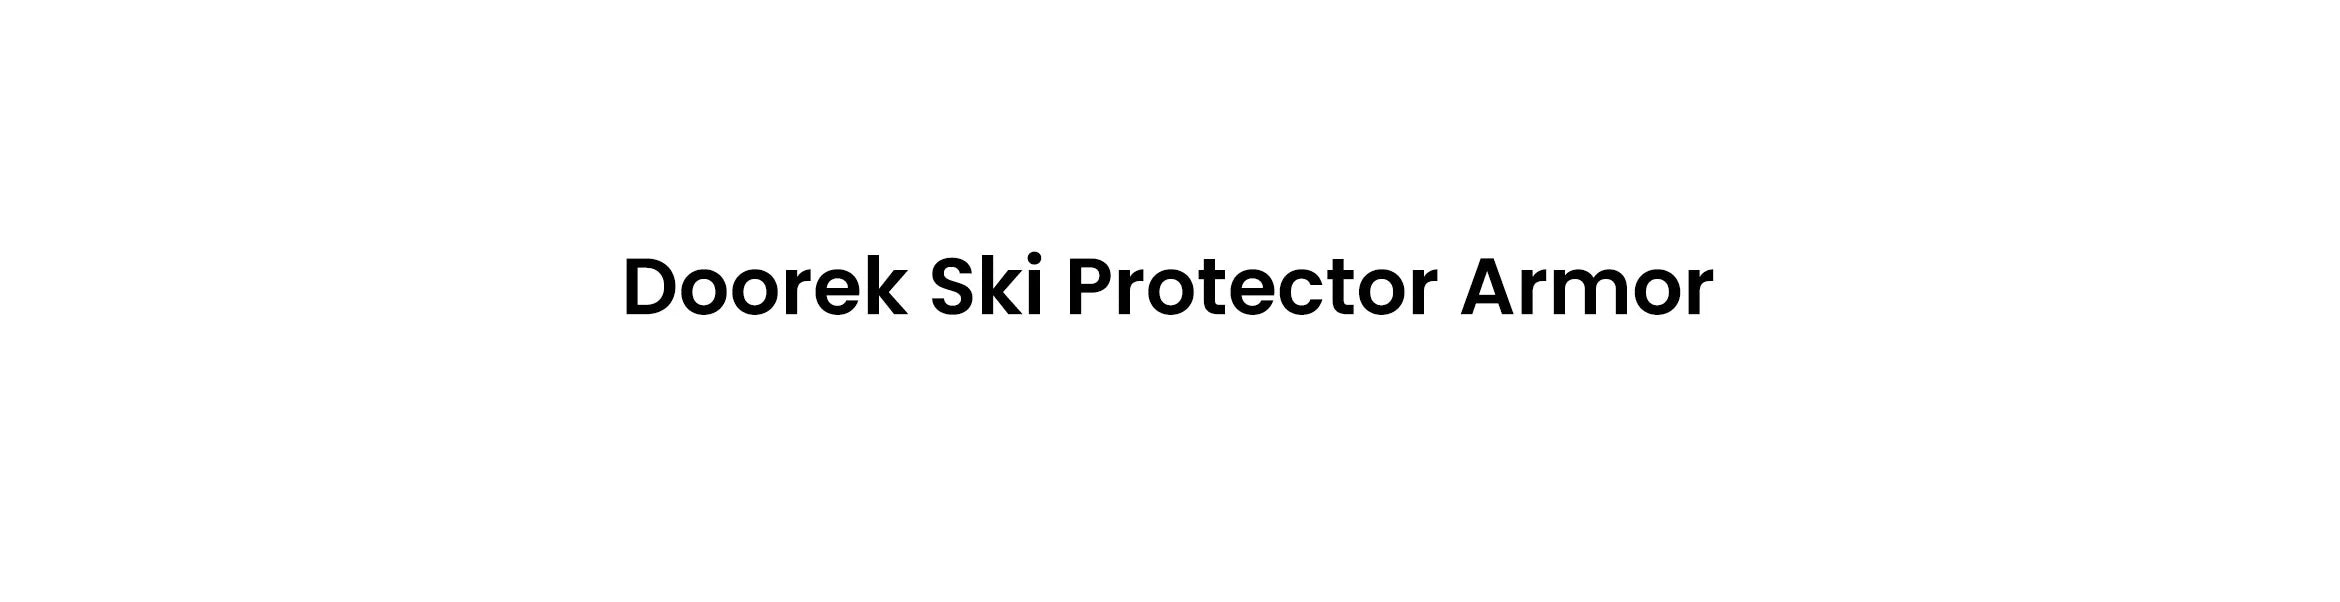 1. Doorek Ski Protector Armor